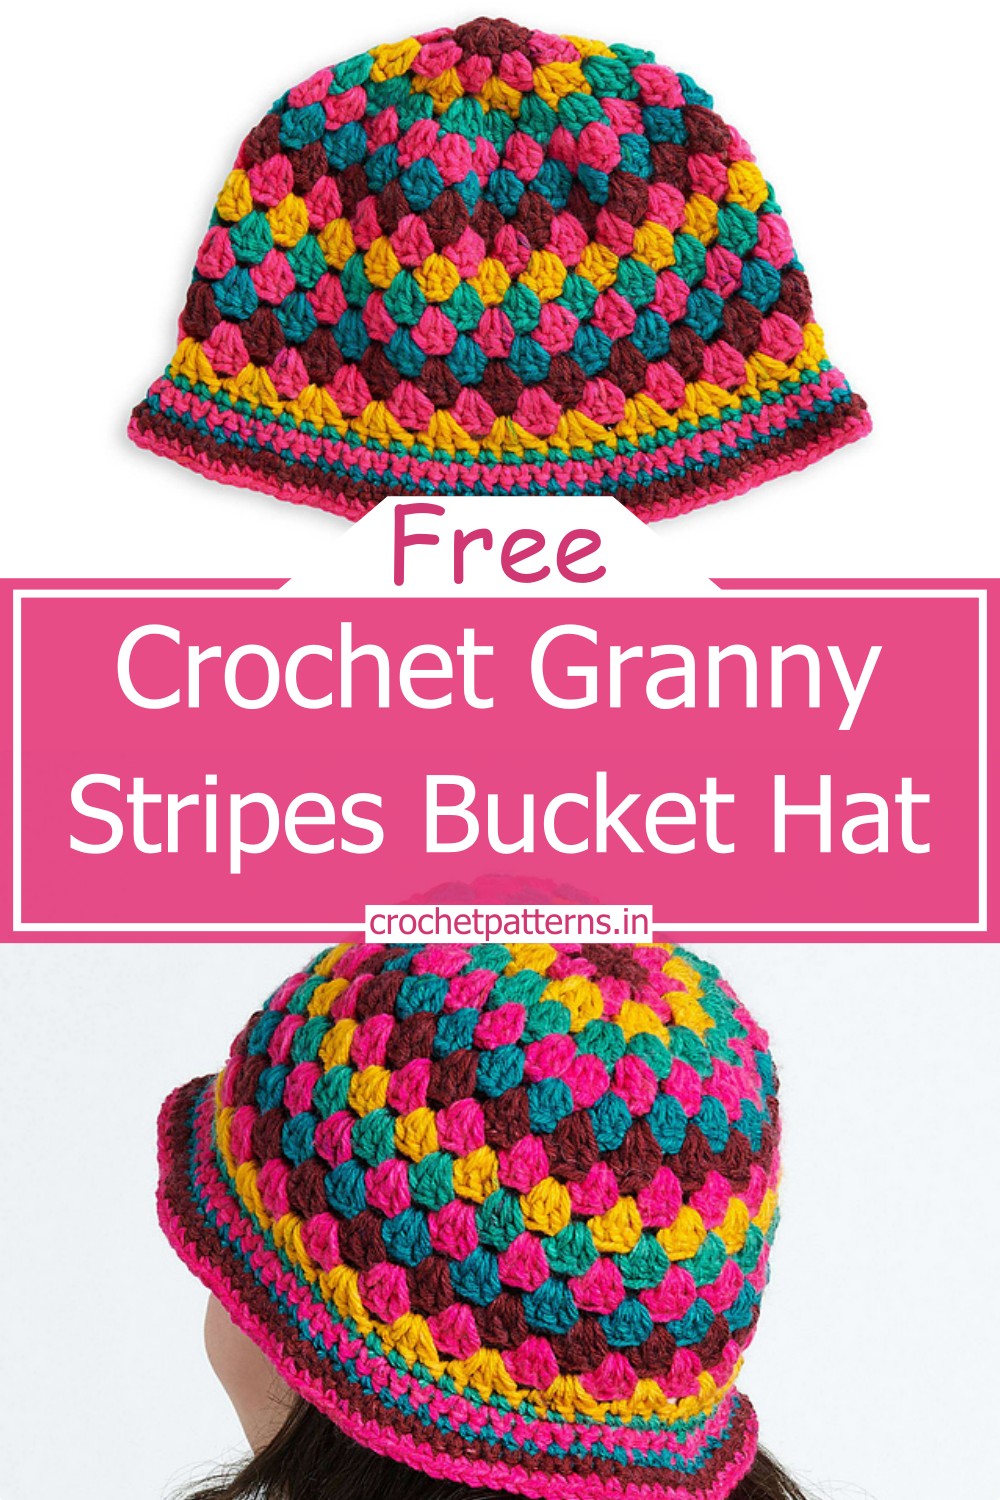 Granny Stripes Bucket Hat